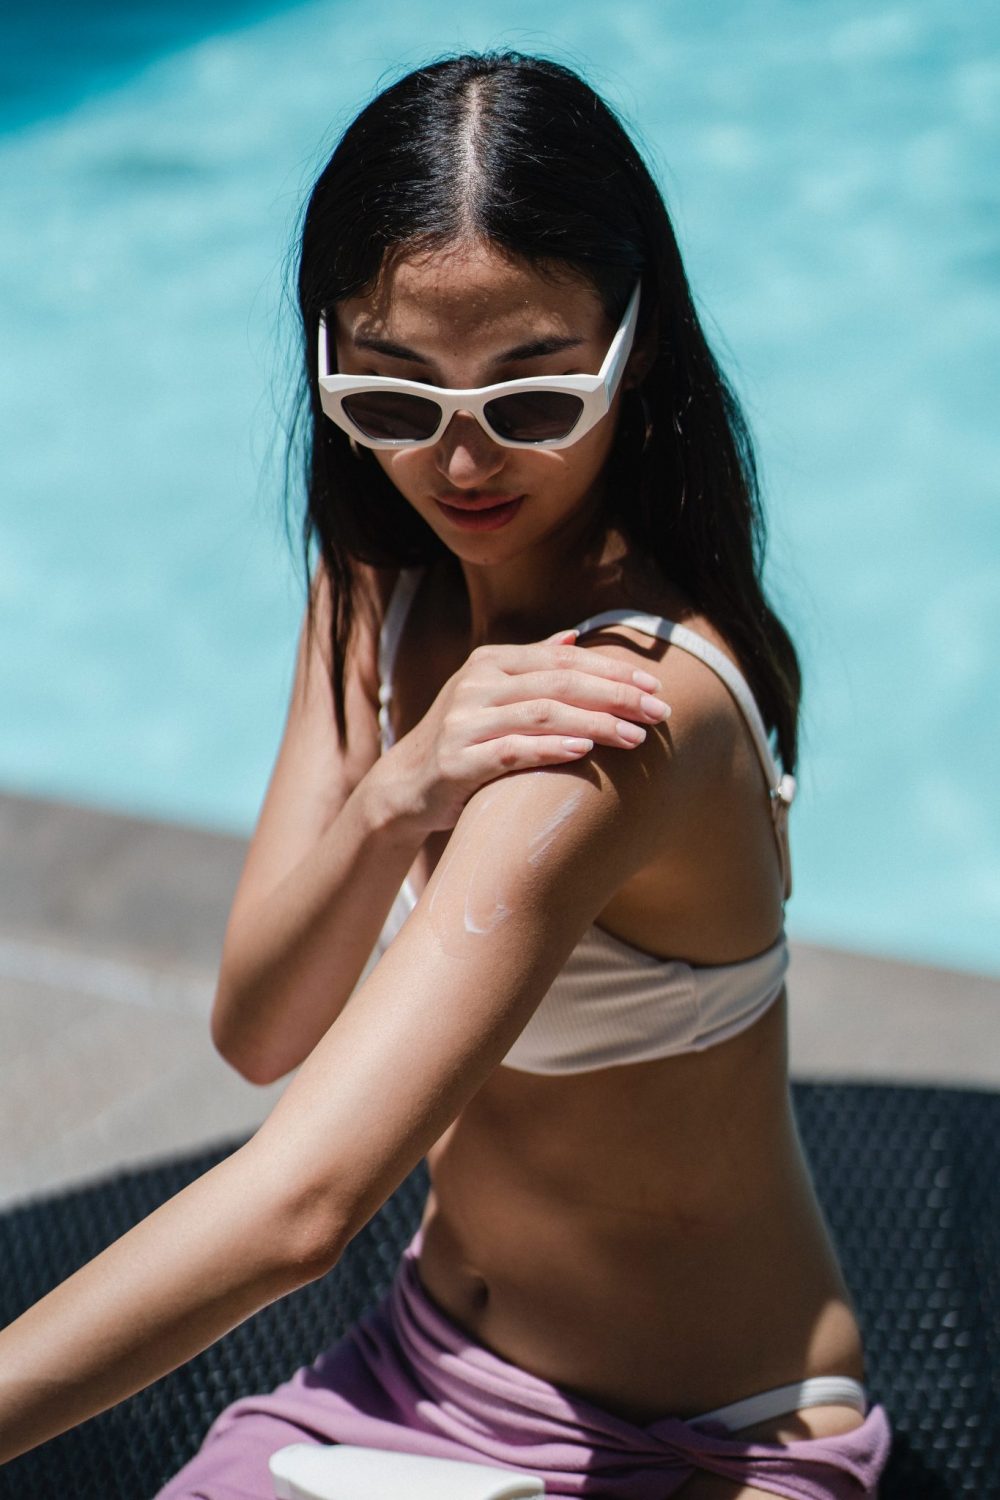 Tips to Remember When Choosing a Summer Sunscreen